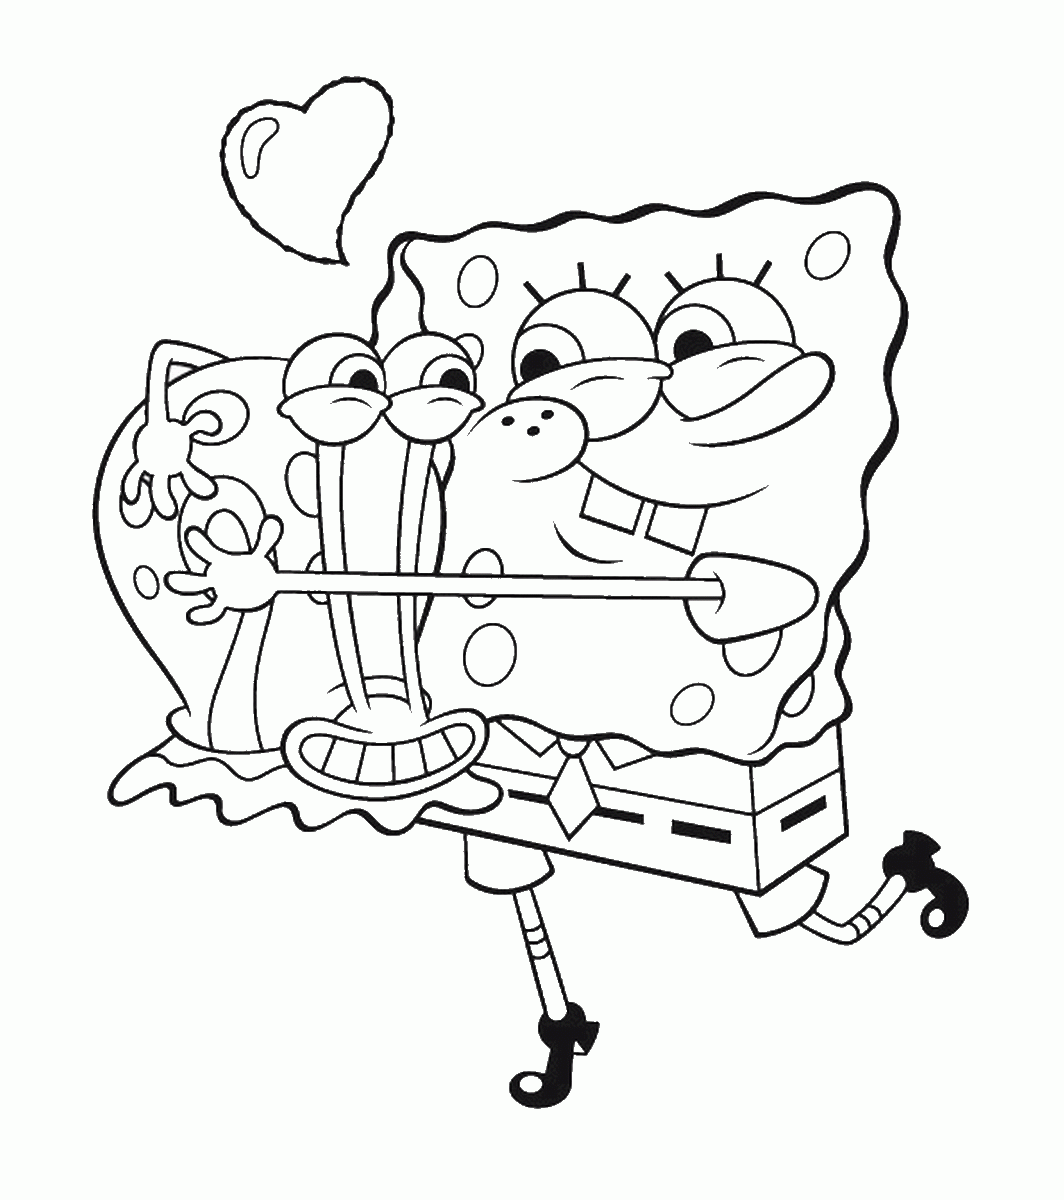 SpongeBob SquarePants Coloring Pages Cartoons spongebob_cl_55 Printable 2020 5988 Coloring4free